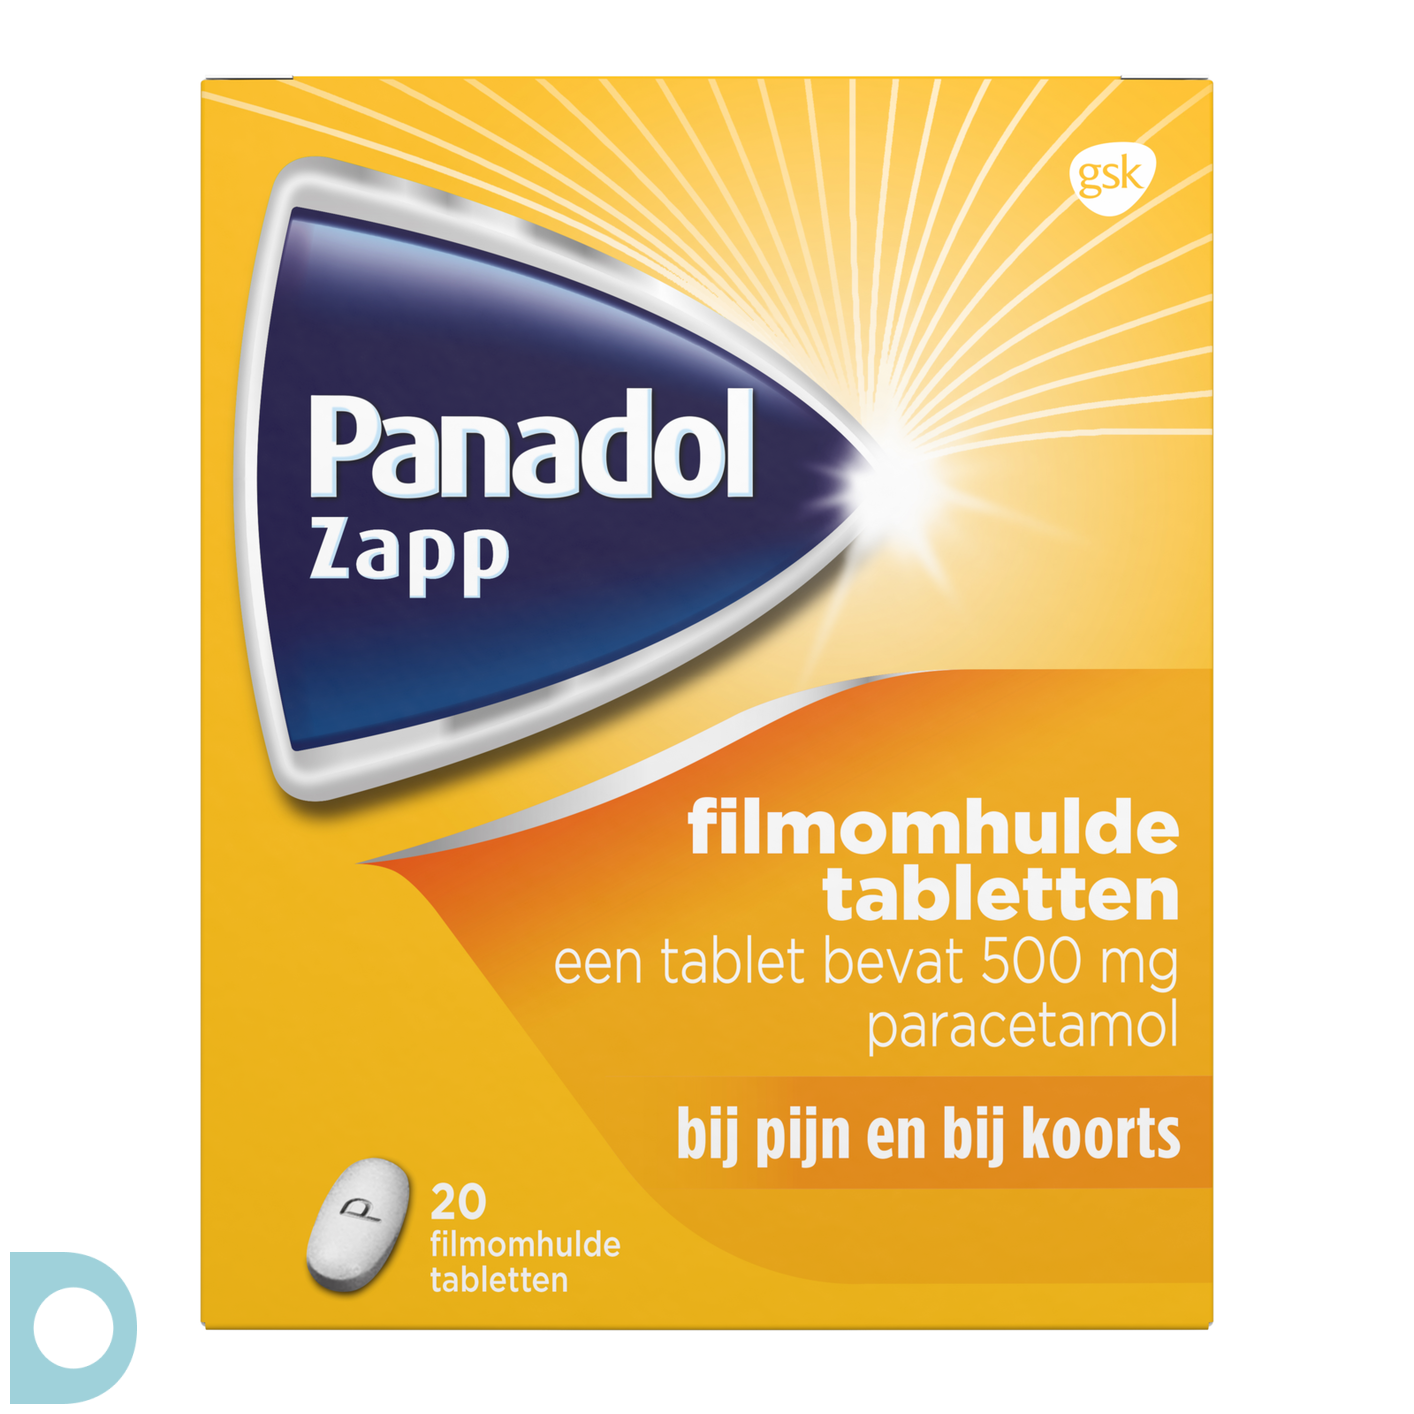 Panadol mg Filmomhulde Tabletten kopen De Drogist